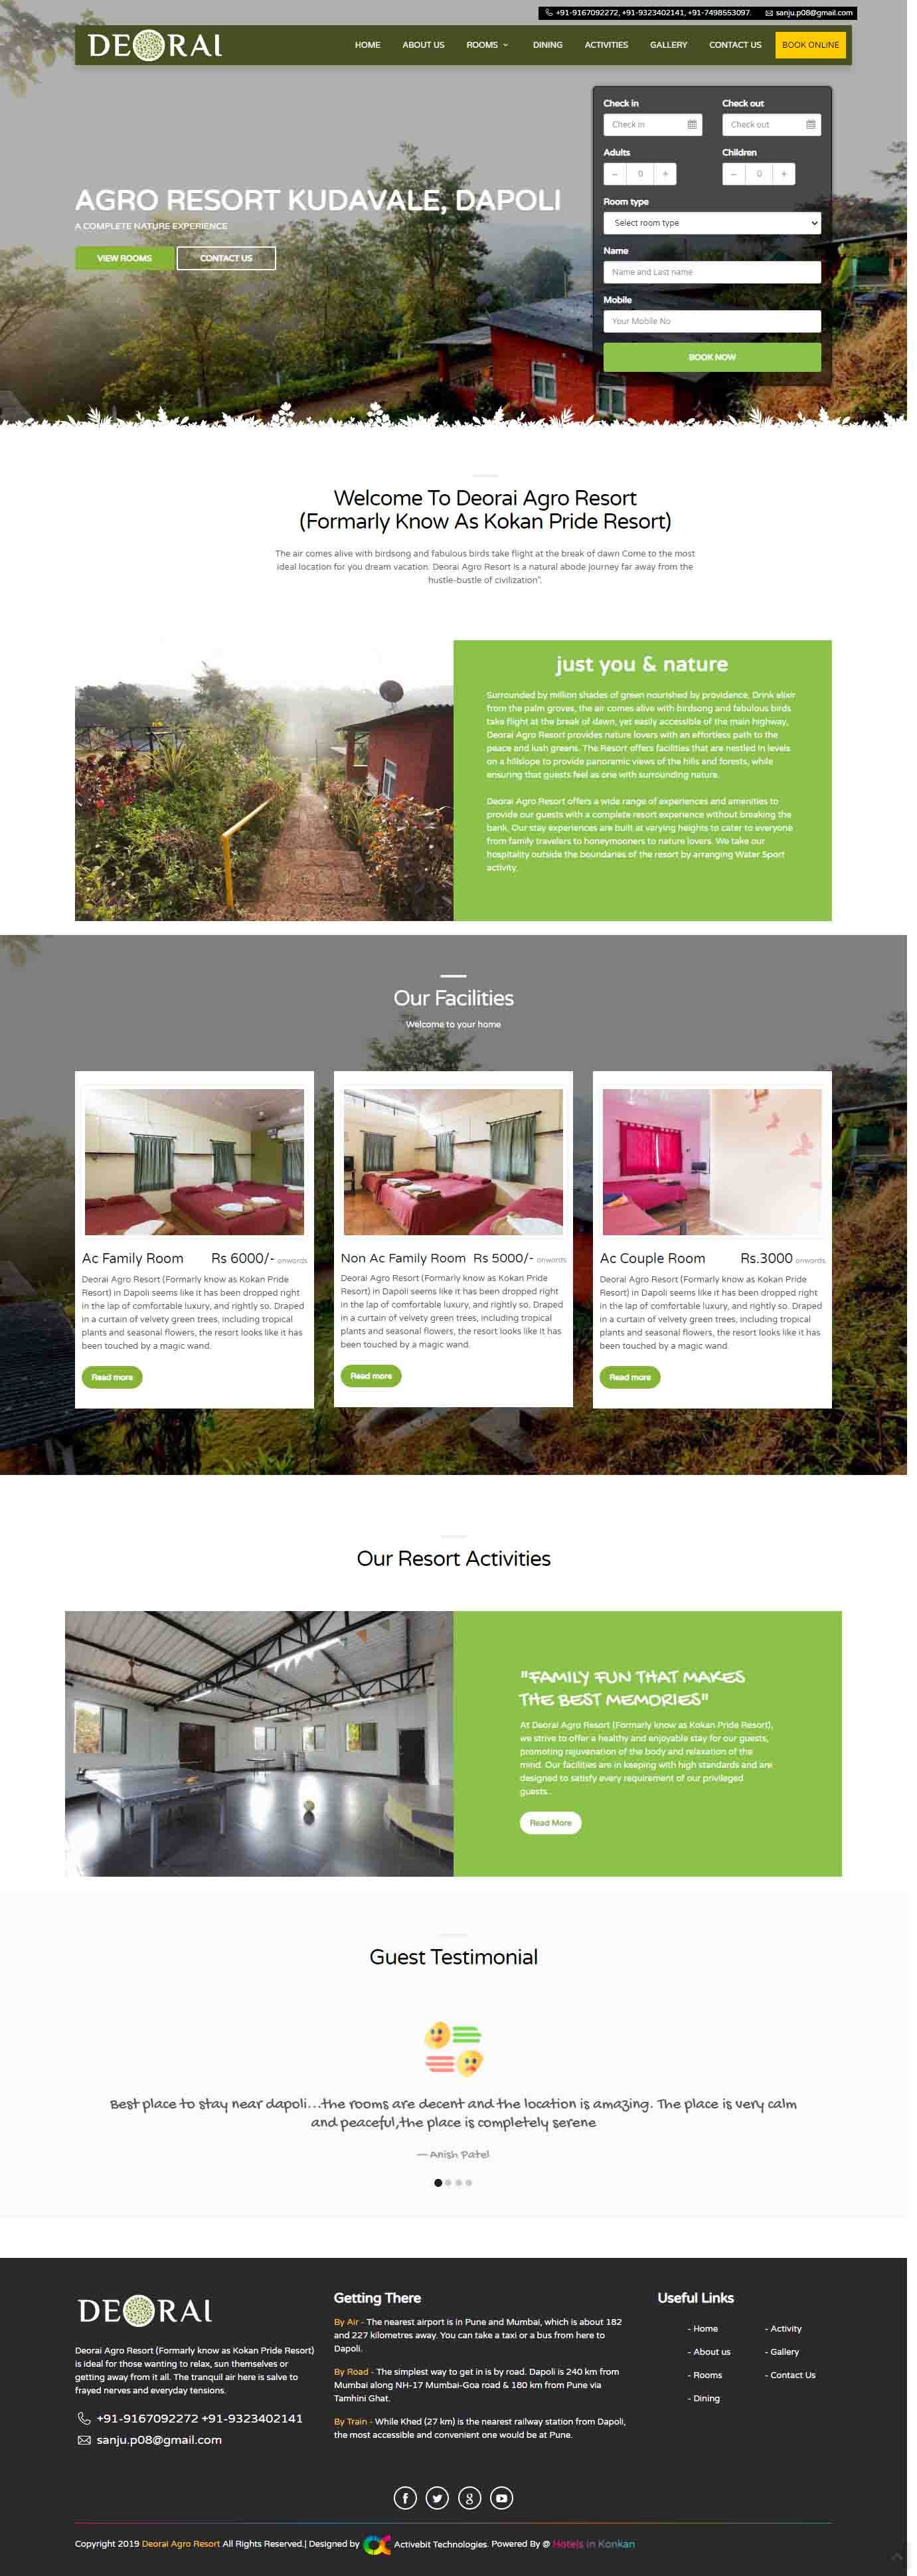 Deorai Agro Resort website development